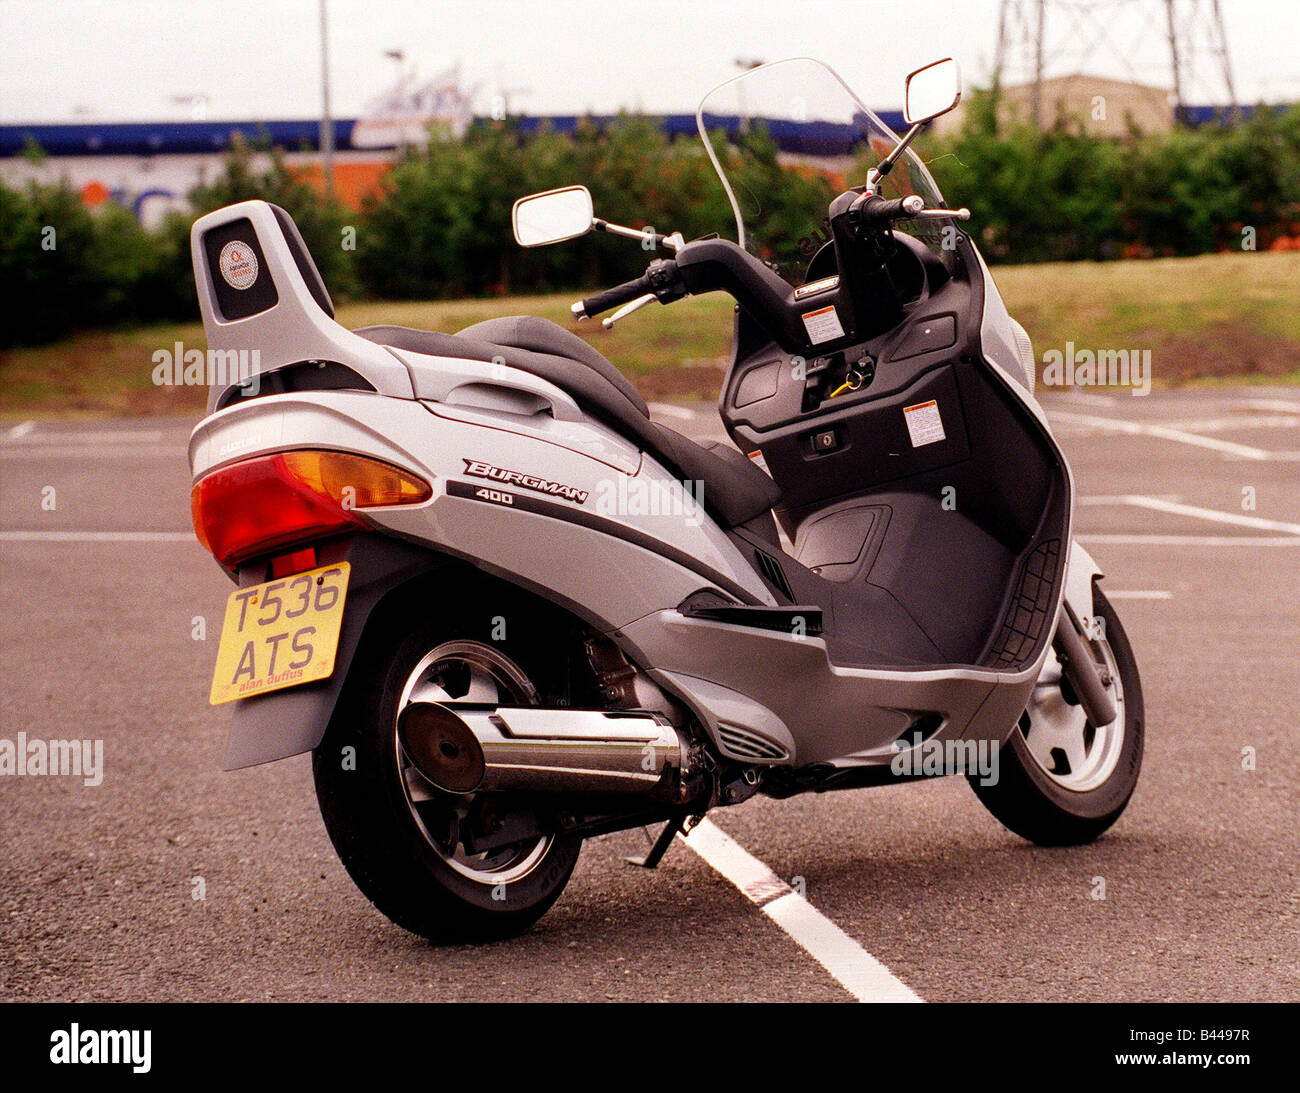 Suzuki Burgman 400 motorbike June 1999 Stock Photo - Alamy